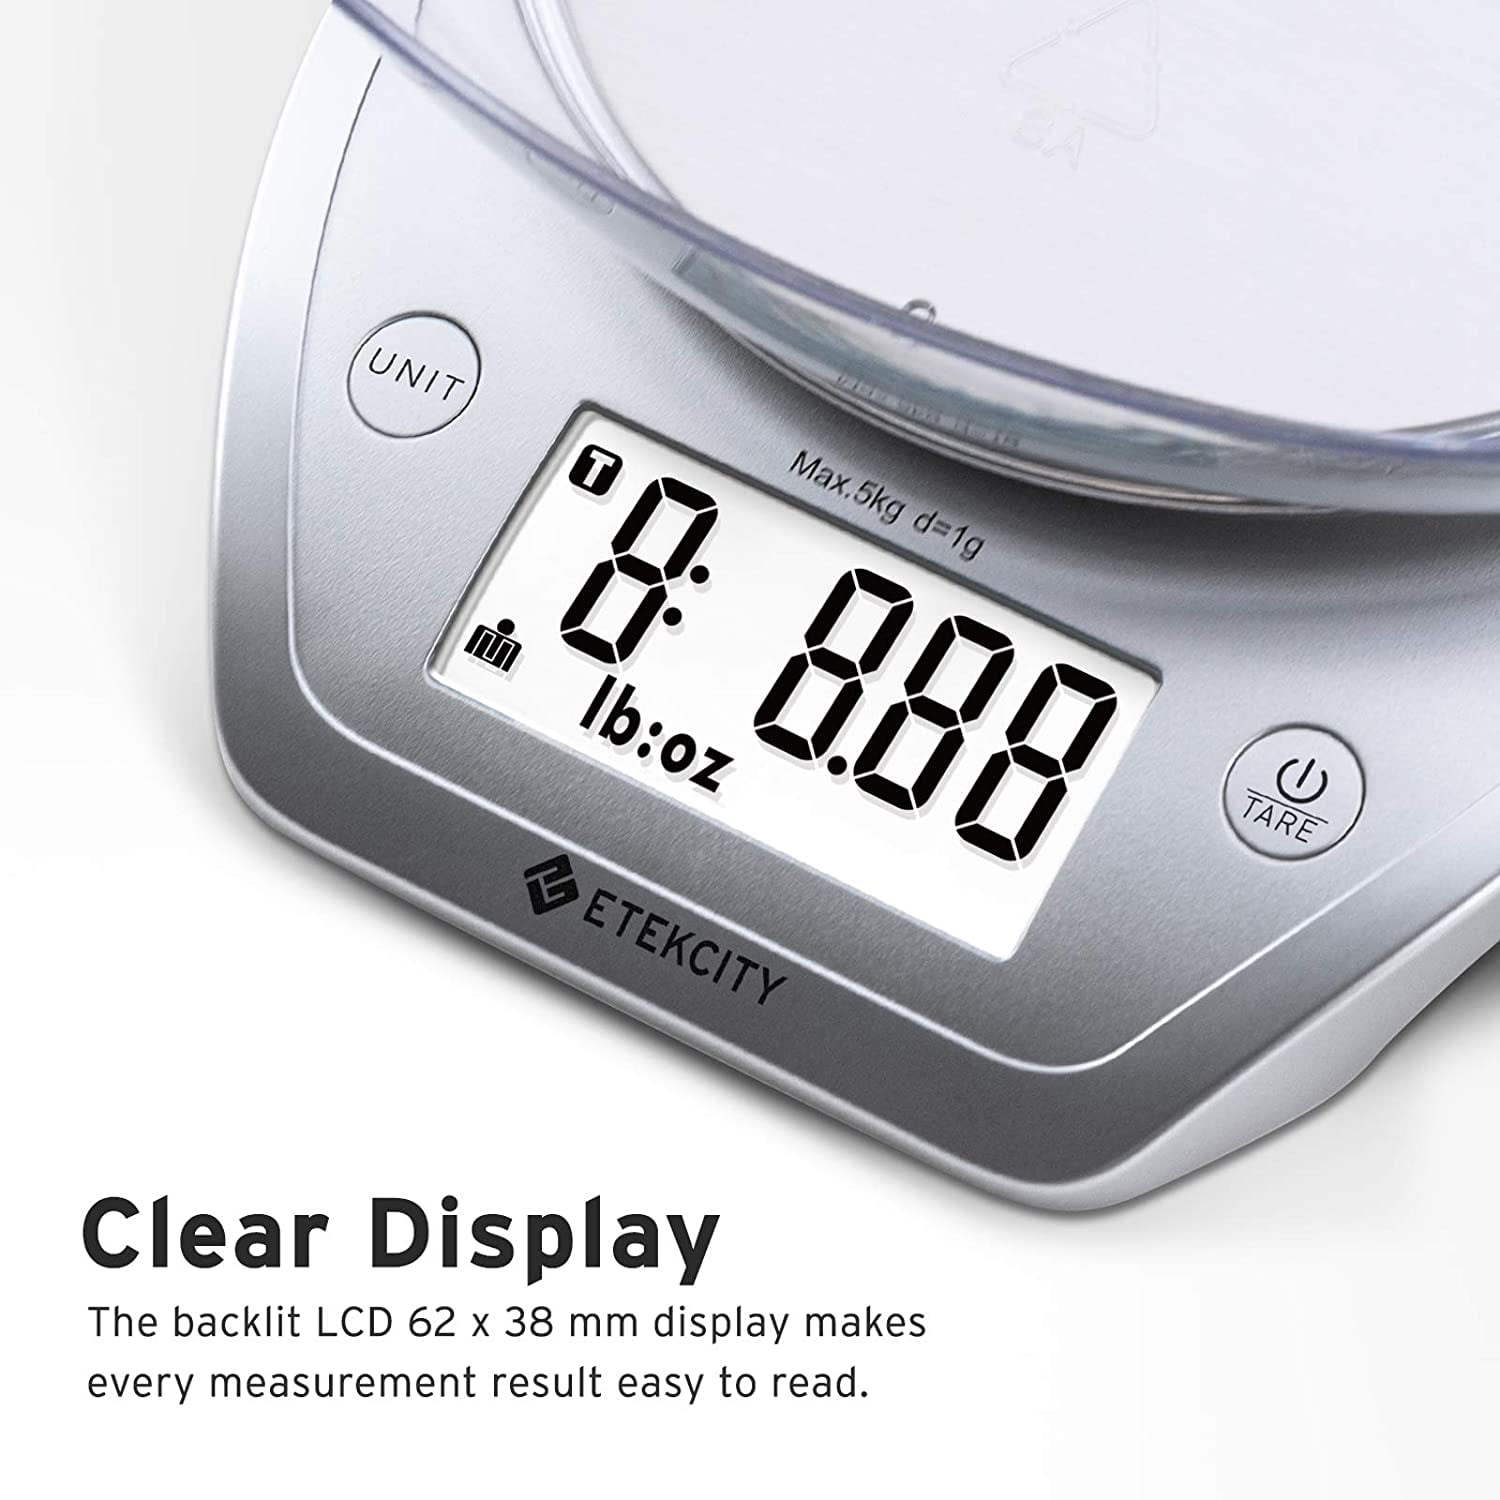 Etekcity EK5250 Digital Kitchen Scale